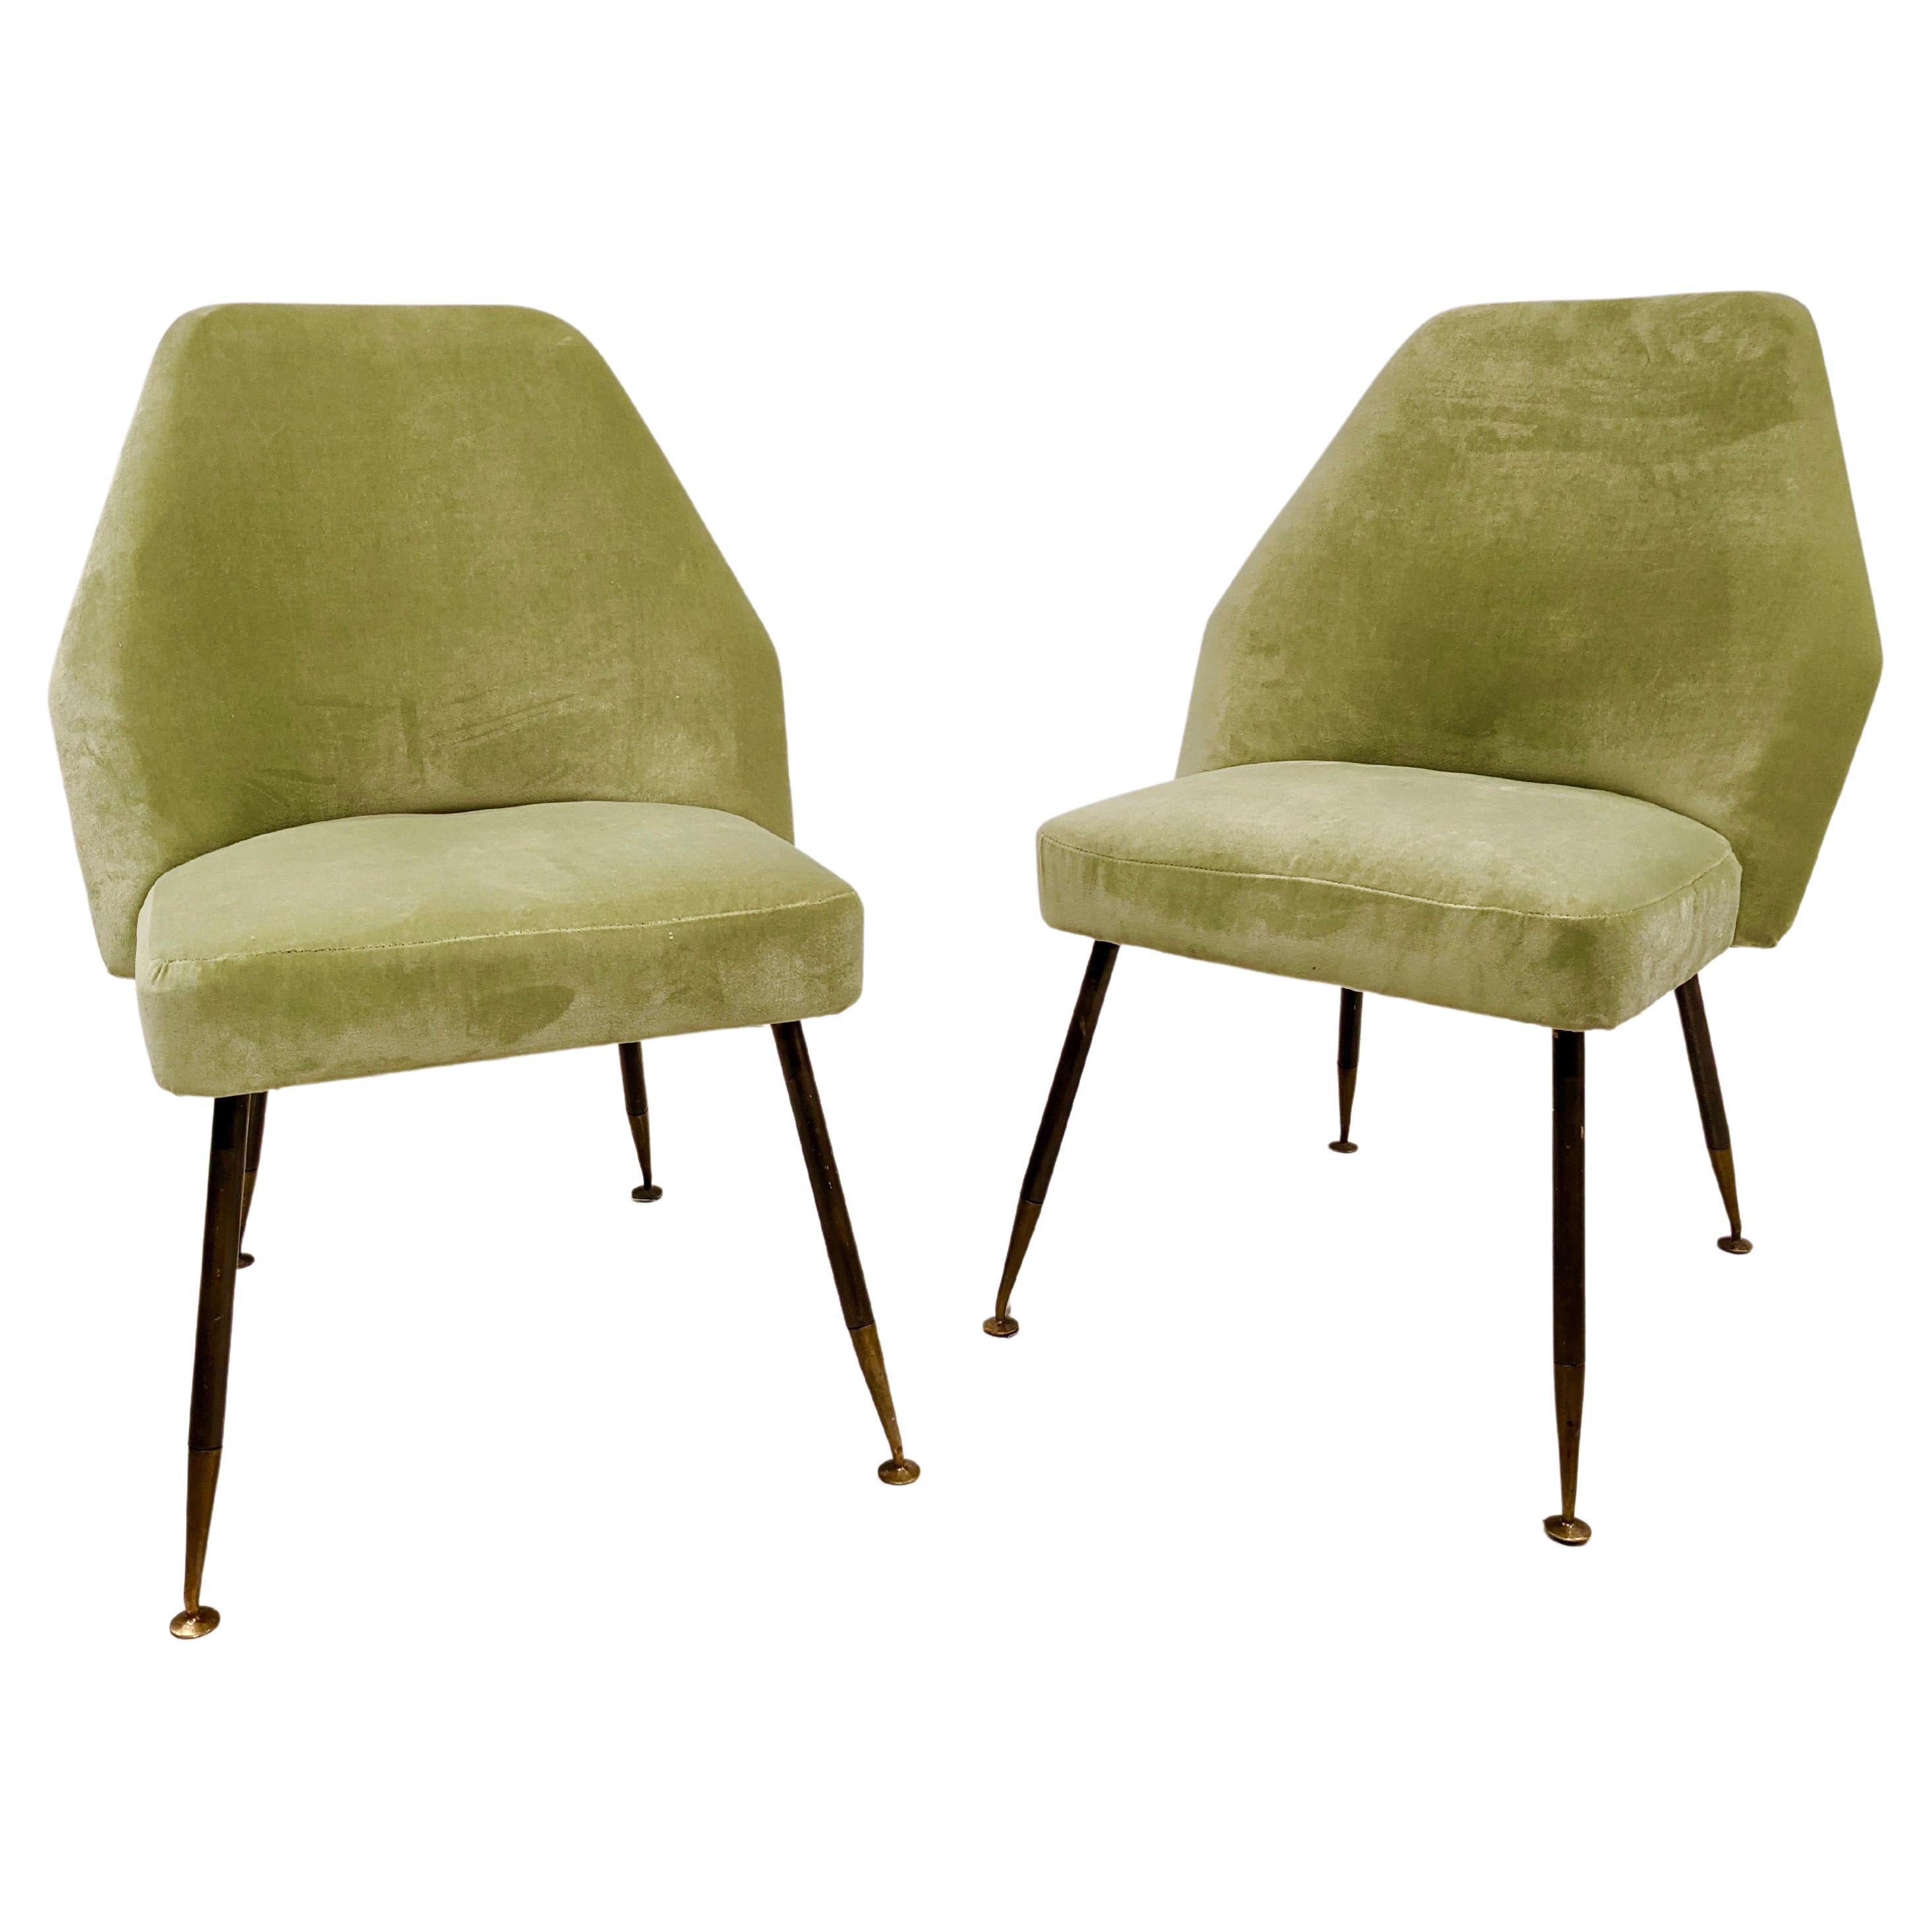 Set of Two Green Carlo Pagani Chairs, Arflex Edition, 1960